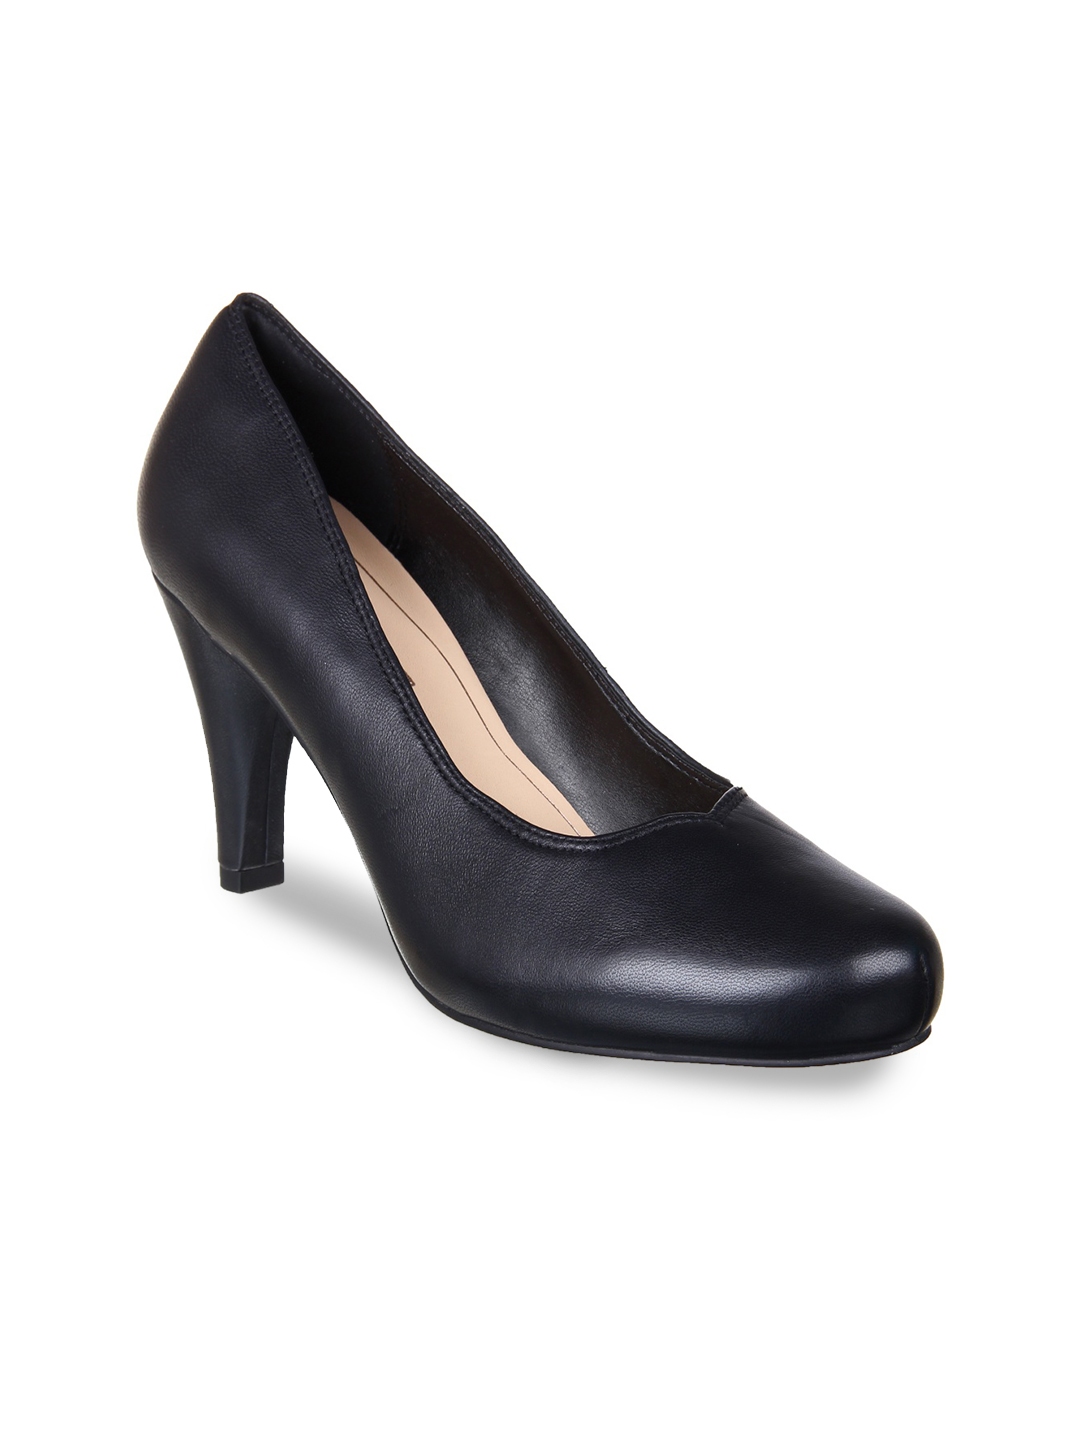 Buy Clarks Women Black Solid Leather Pumps - Heels for Women 6968317 ...